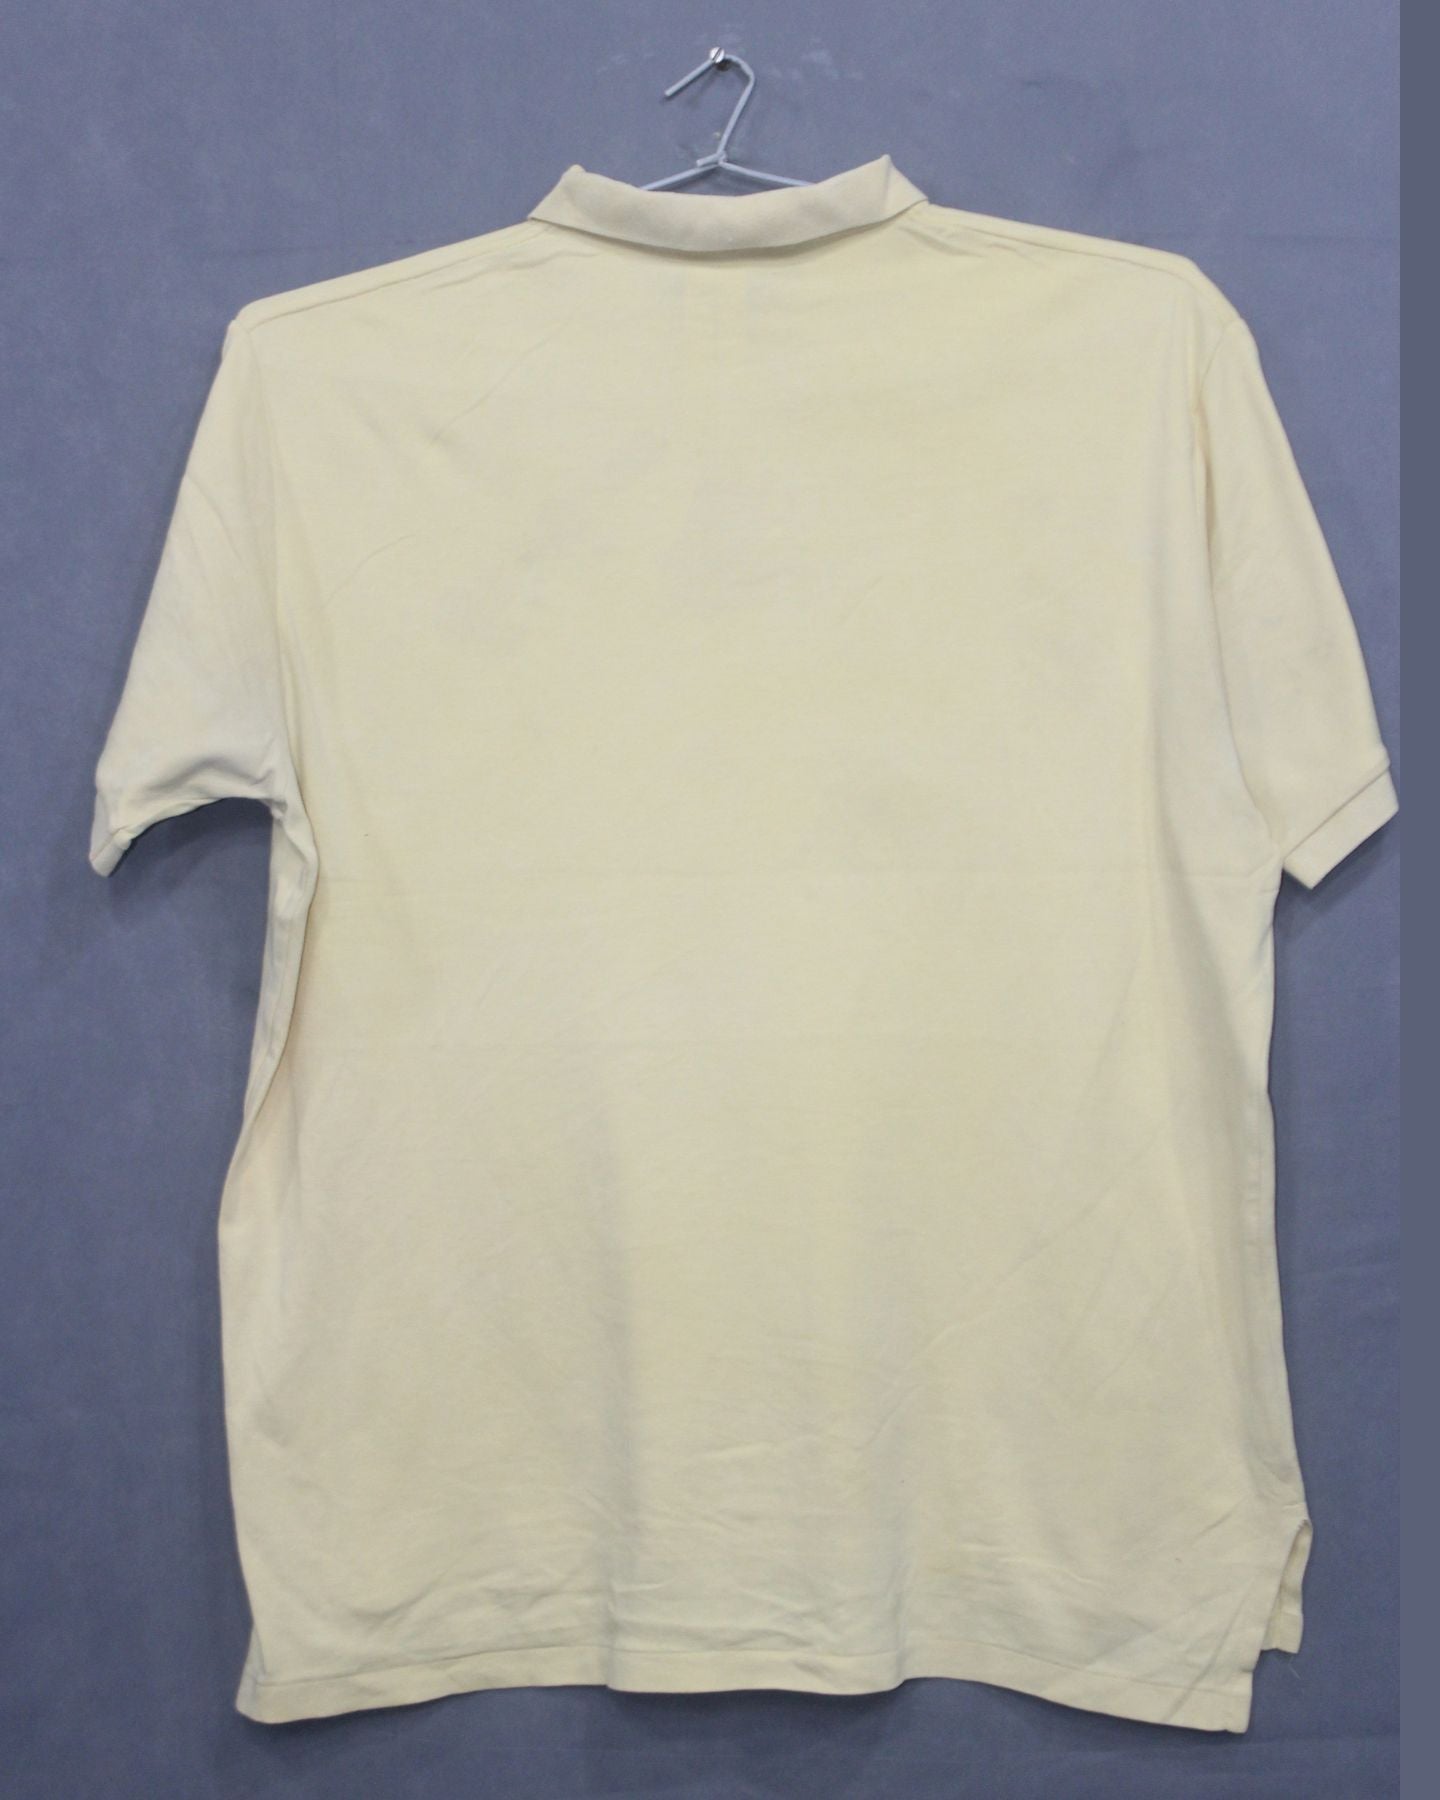 Polo Ralph Lauren Branded Original Cotton Polo T Shirt For Men